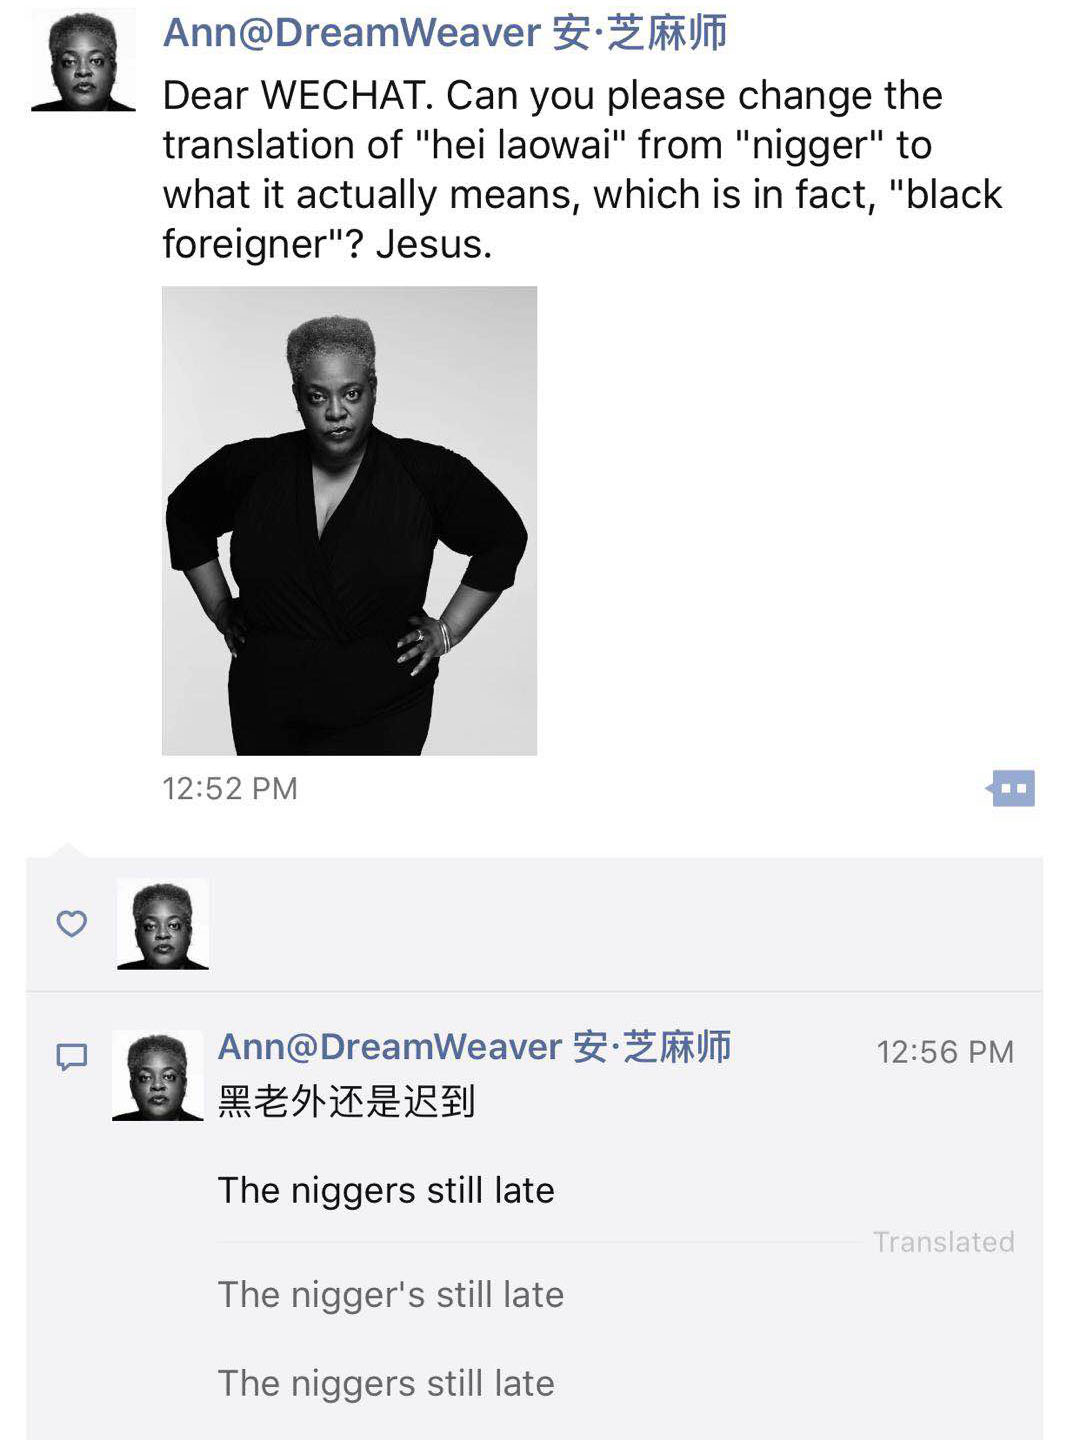 WeChat Translation